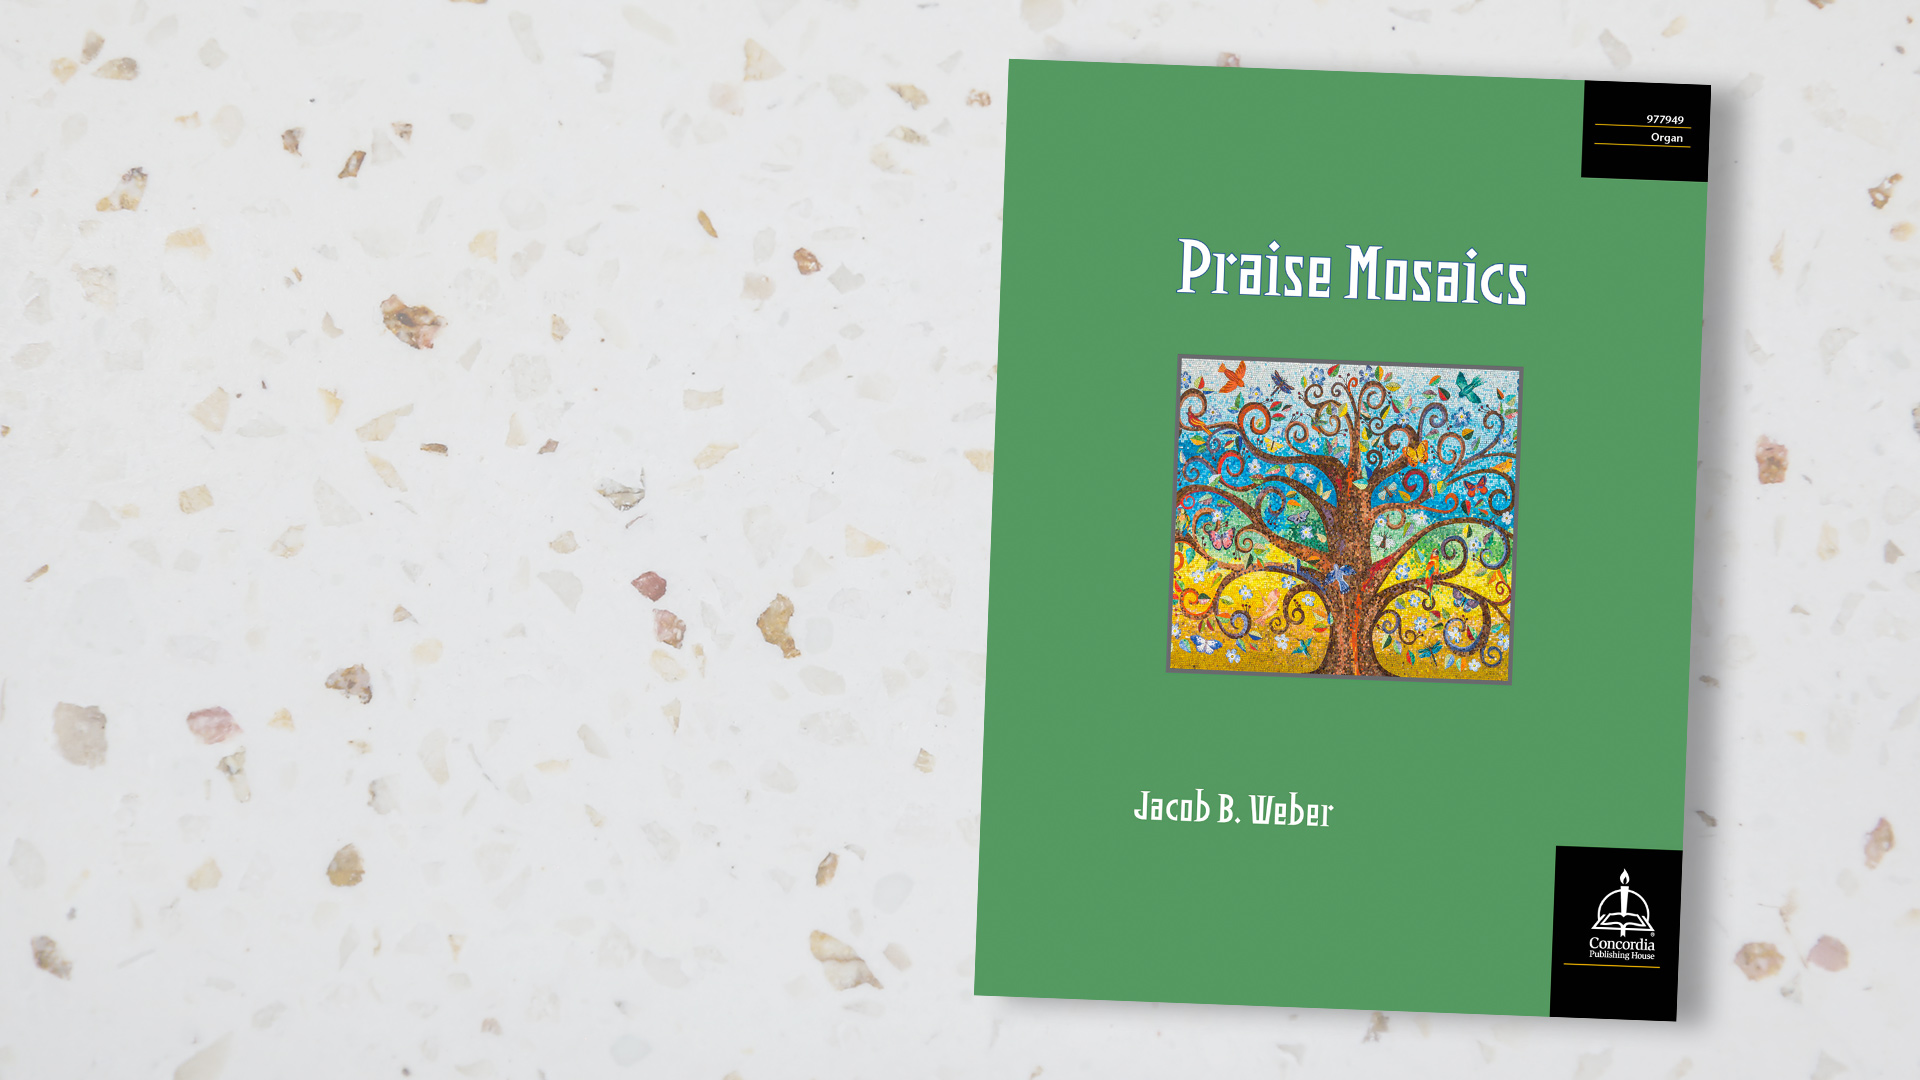 Music of the Month: Praise Mosaics